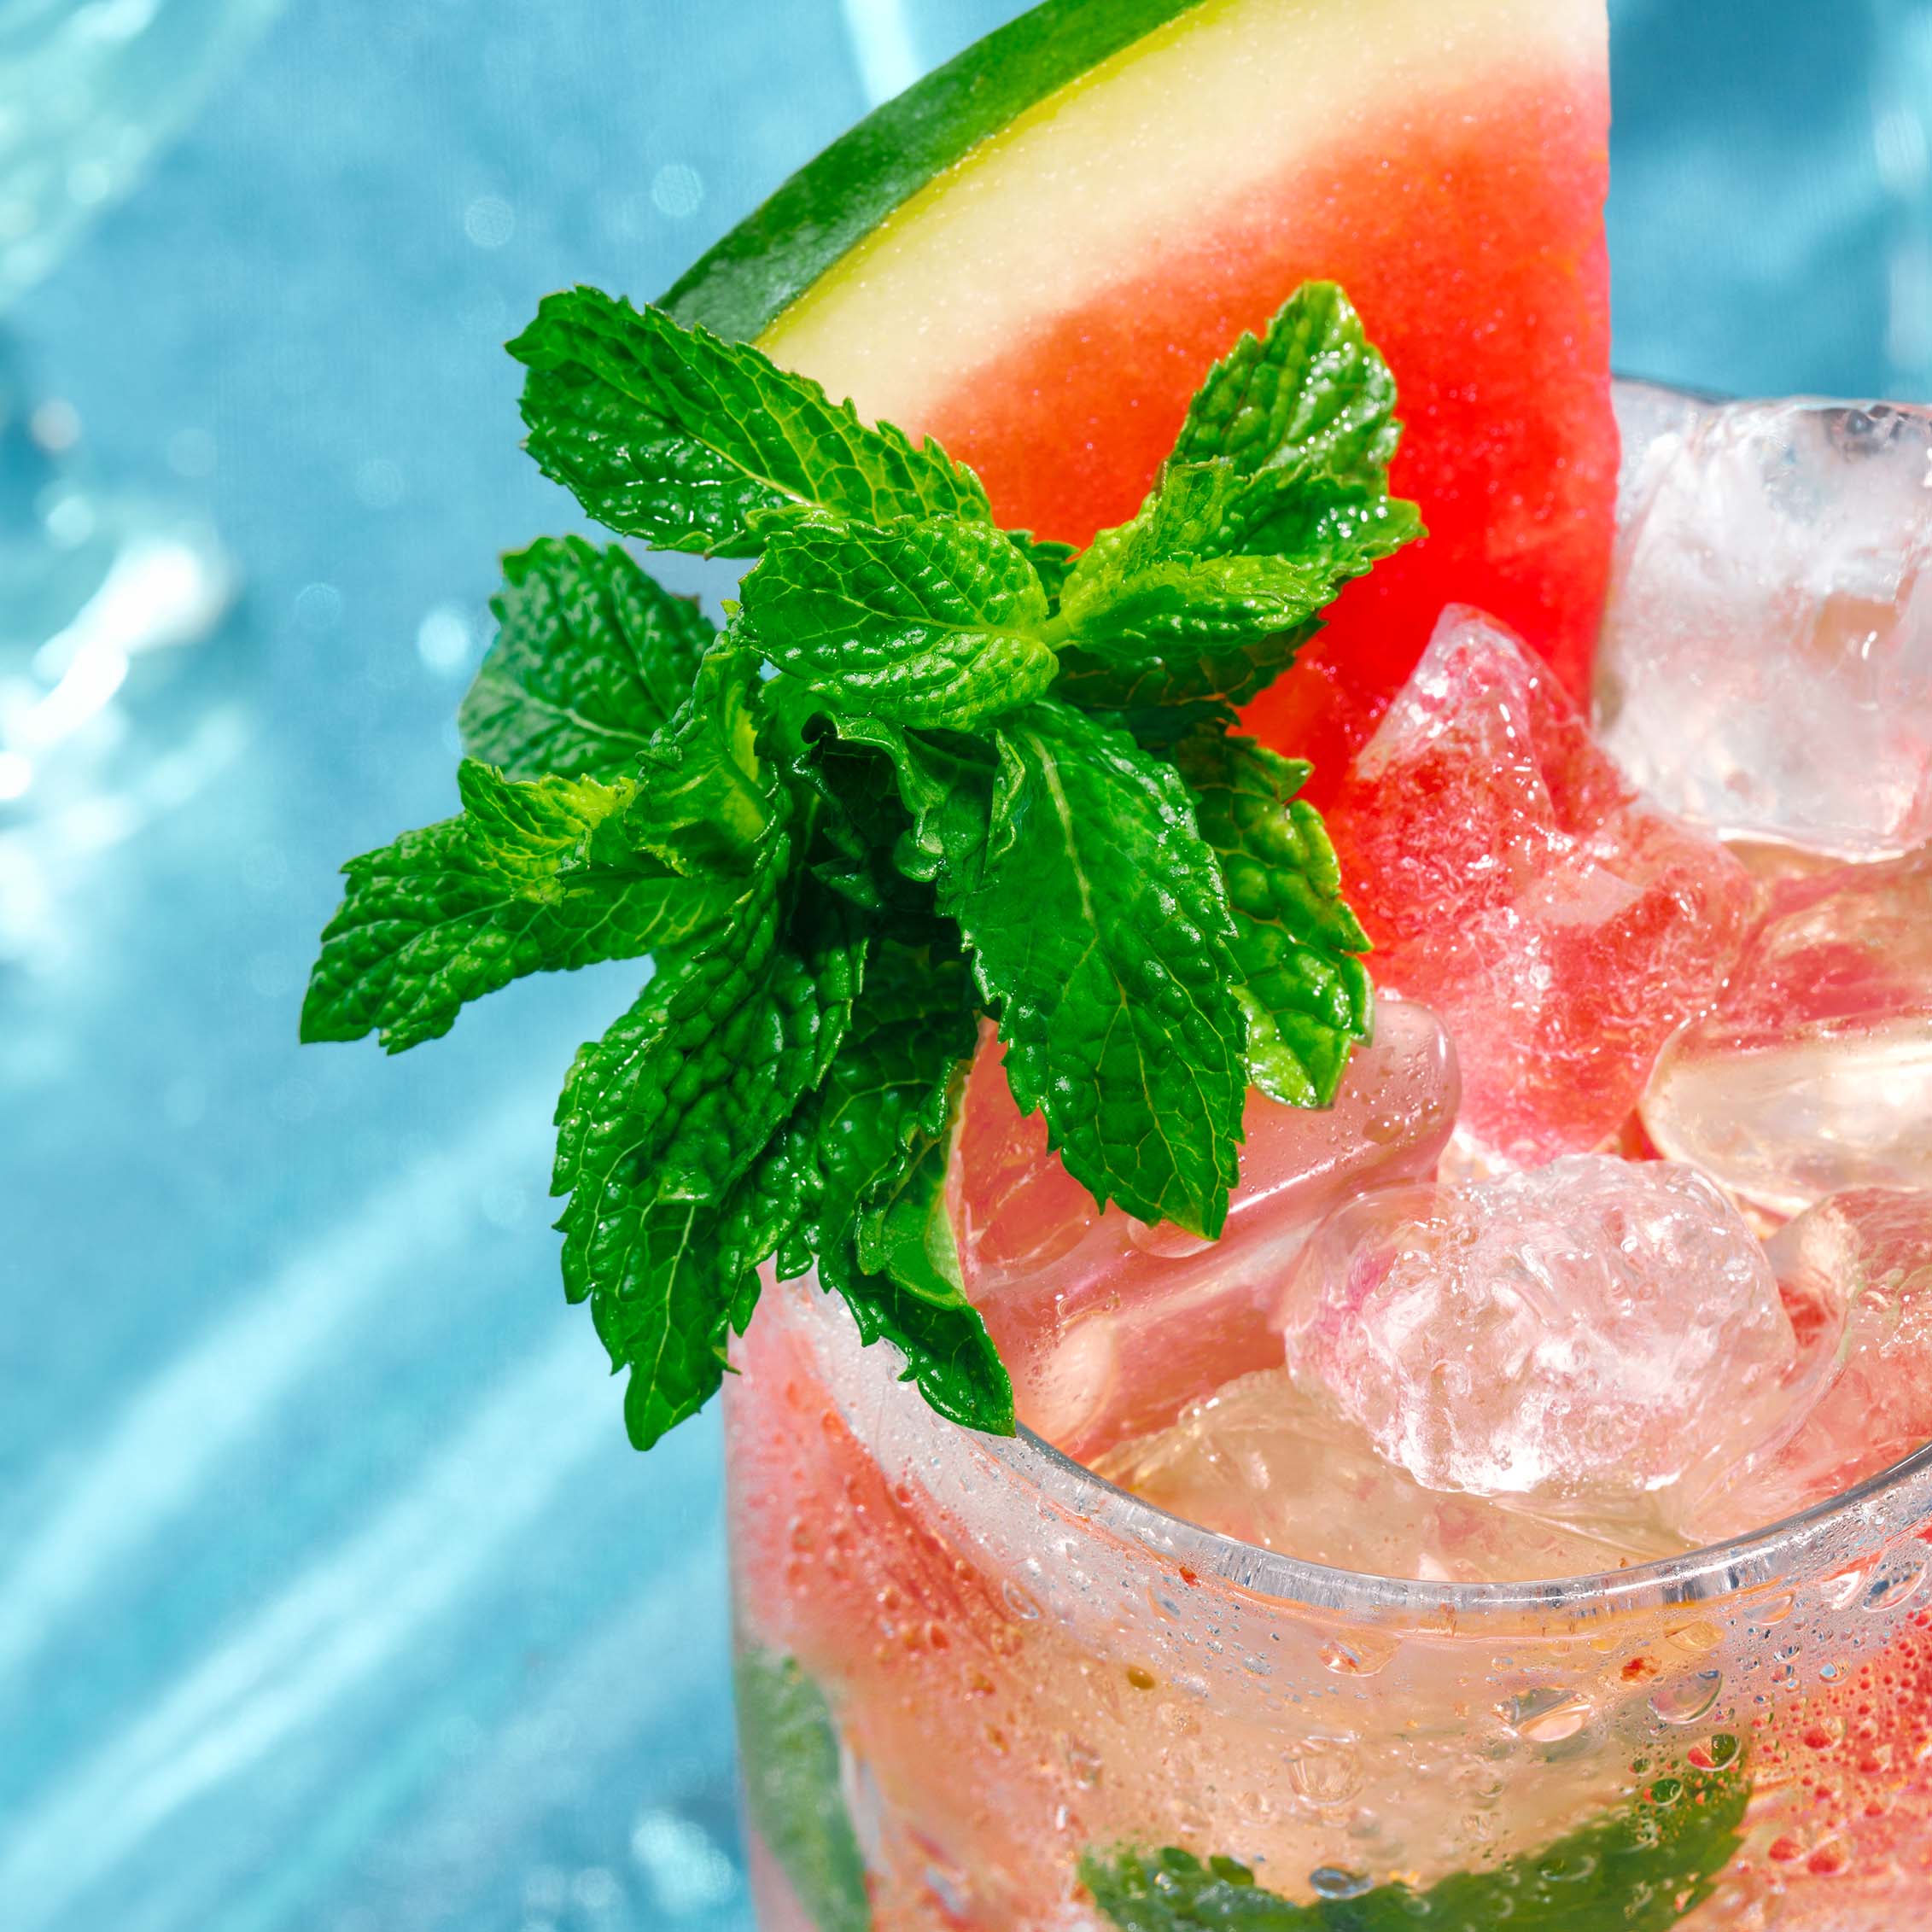 Malibu drink with watermelon and mint